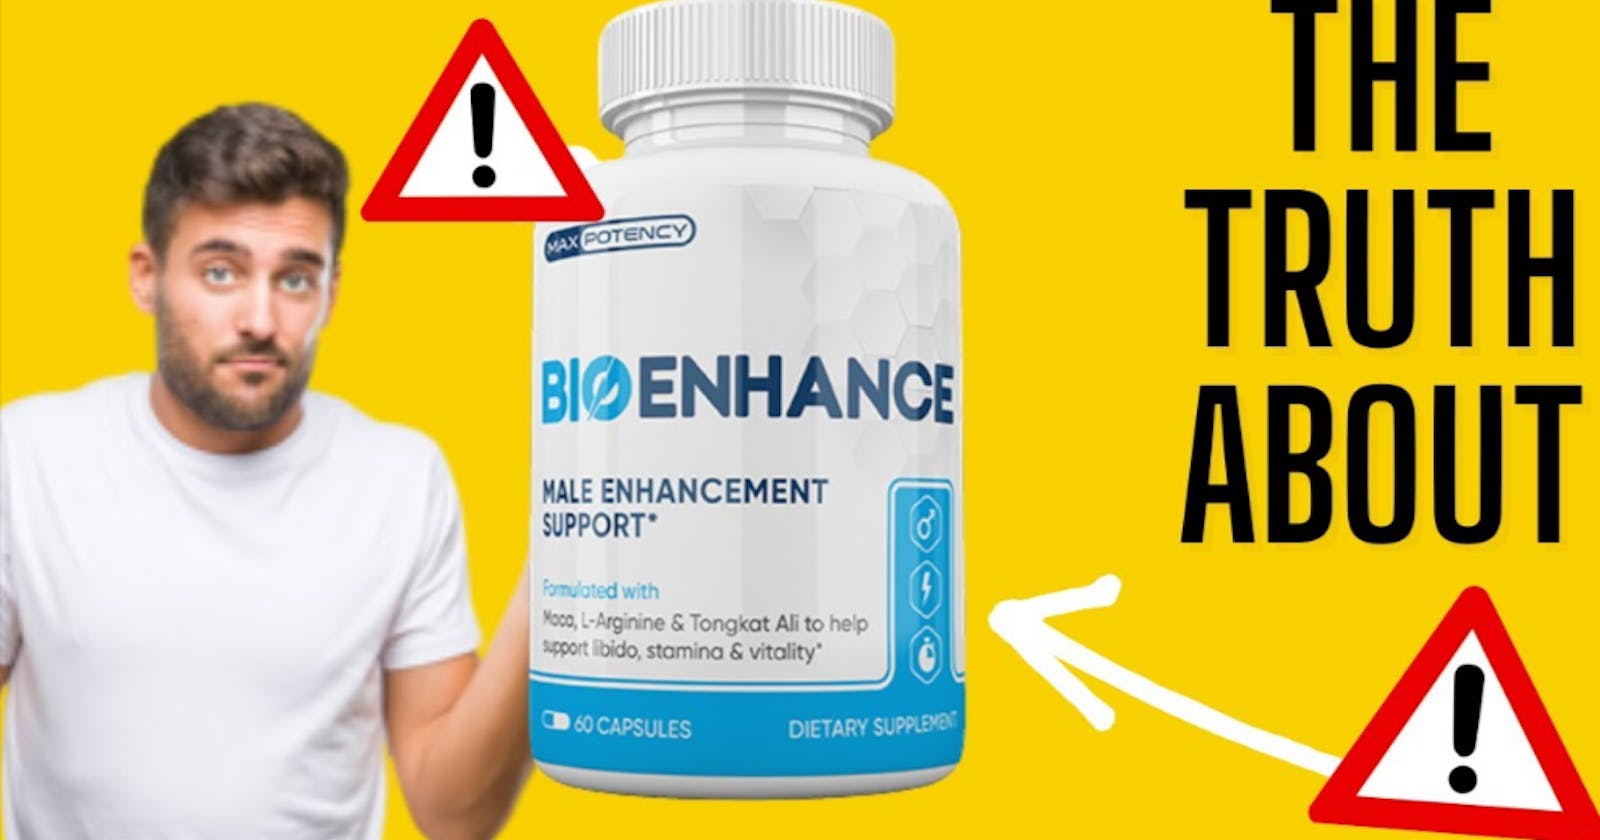 BioEnhance Male Enhancement Reviews, Ingredients, Price & Where to Buy?